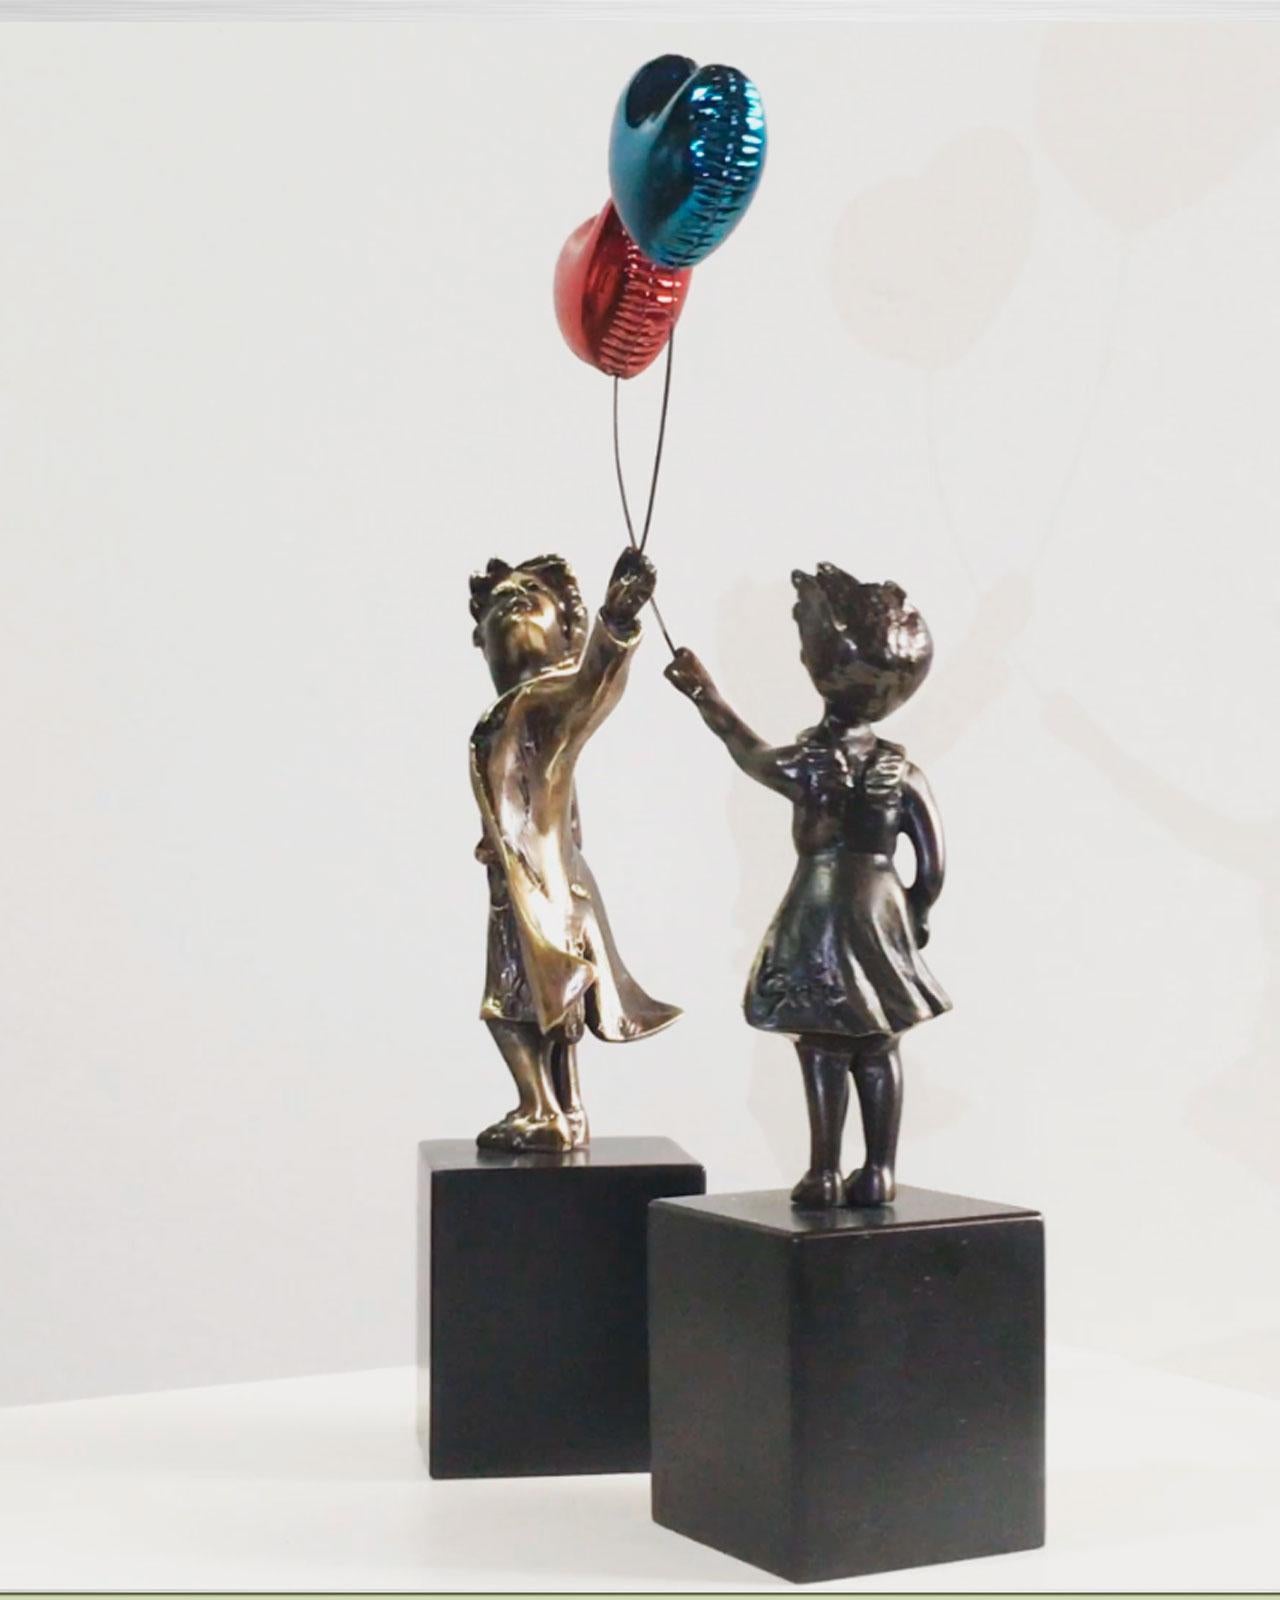 A boy with balloon - Miguel Guía Street Art Cast bronze Sculpture 14